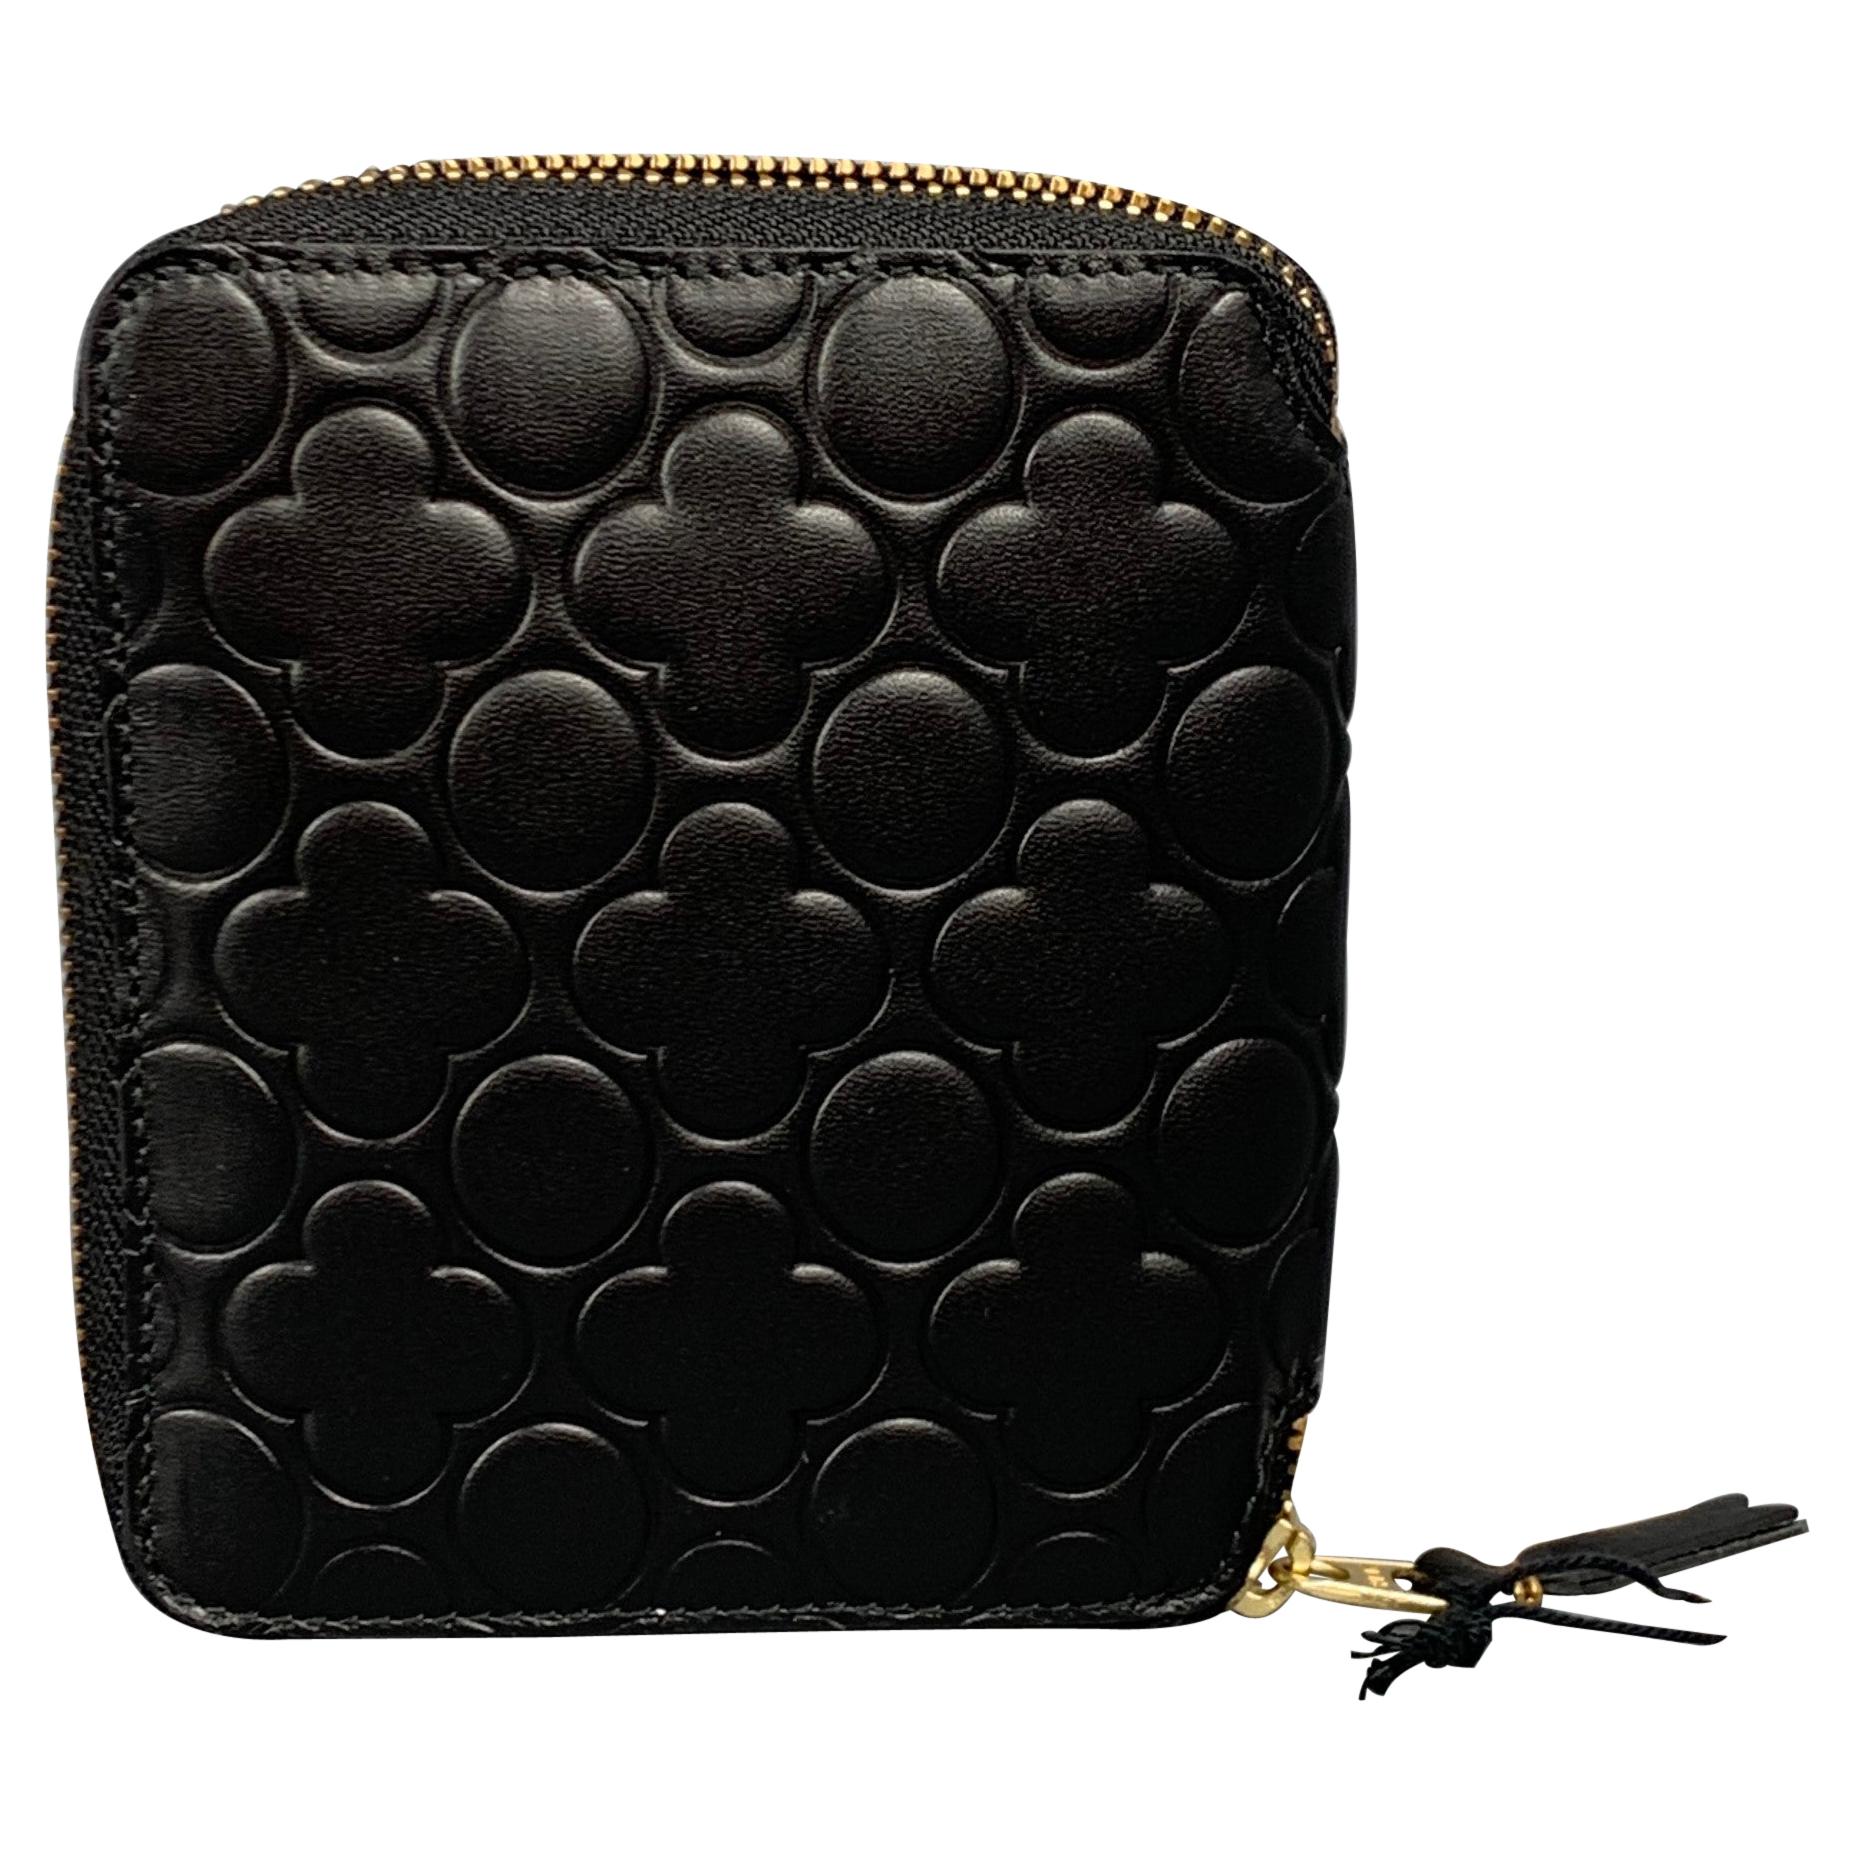 COMME des GARCONS Black Embossed Leather Wallet